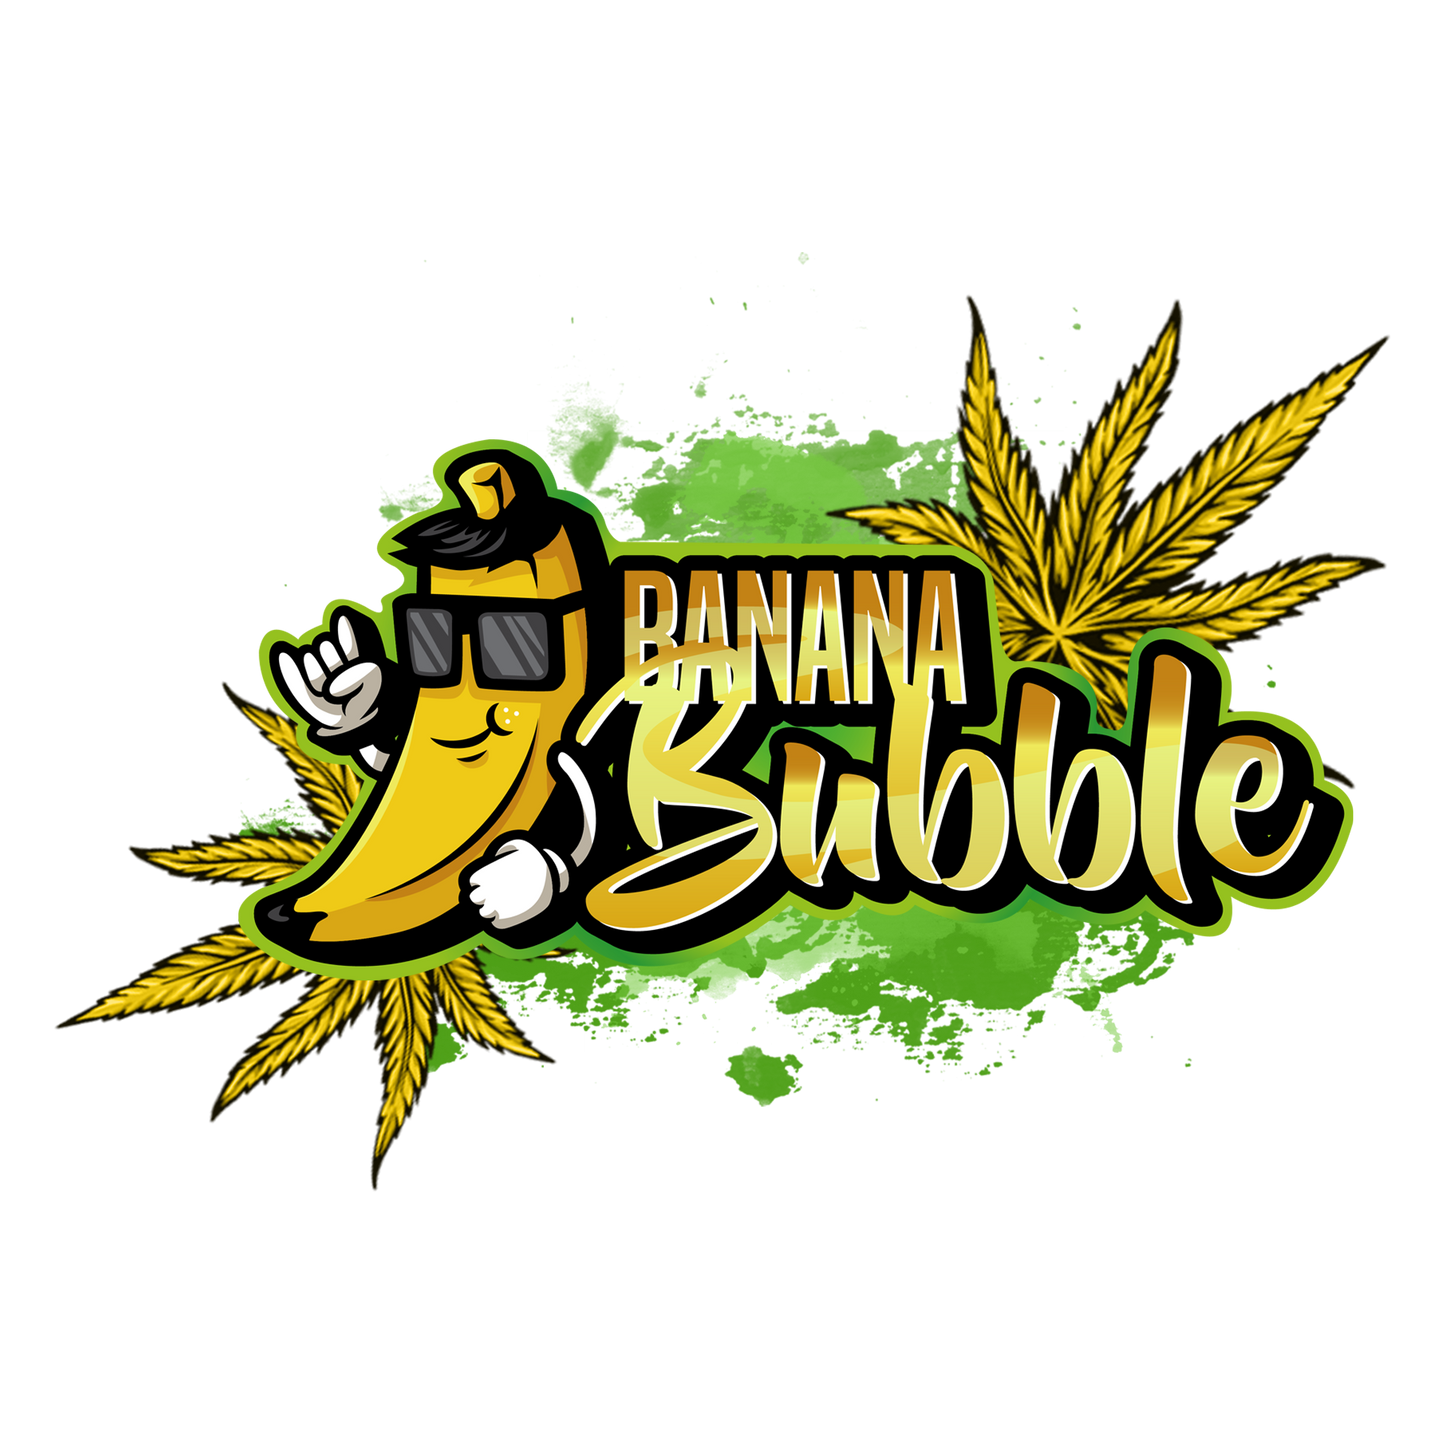 Banana Bubble - Classic CBD - 26%